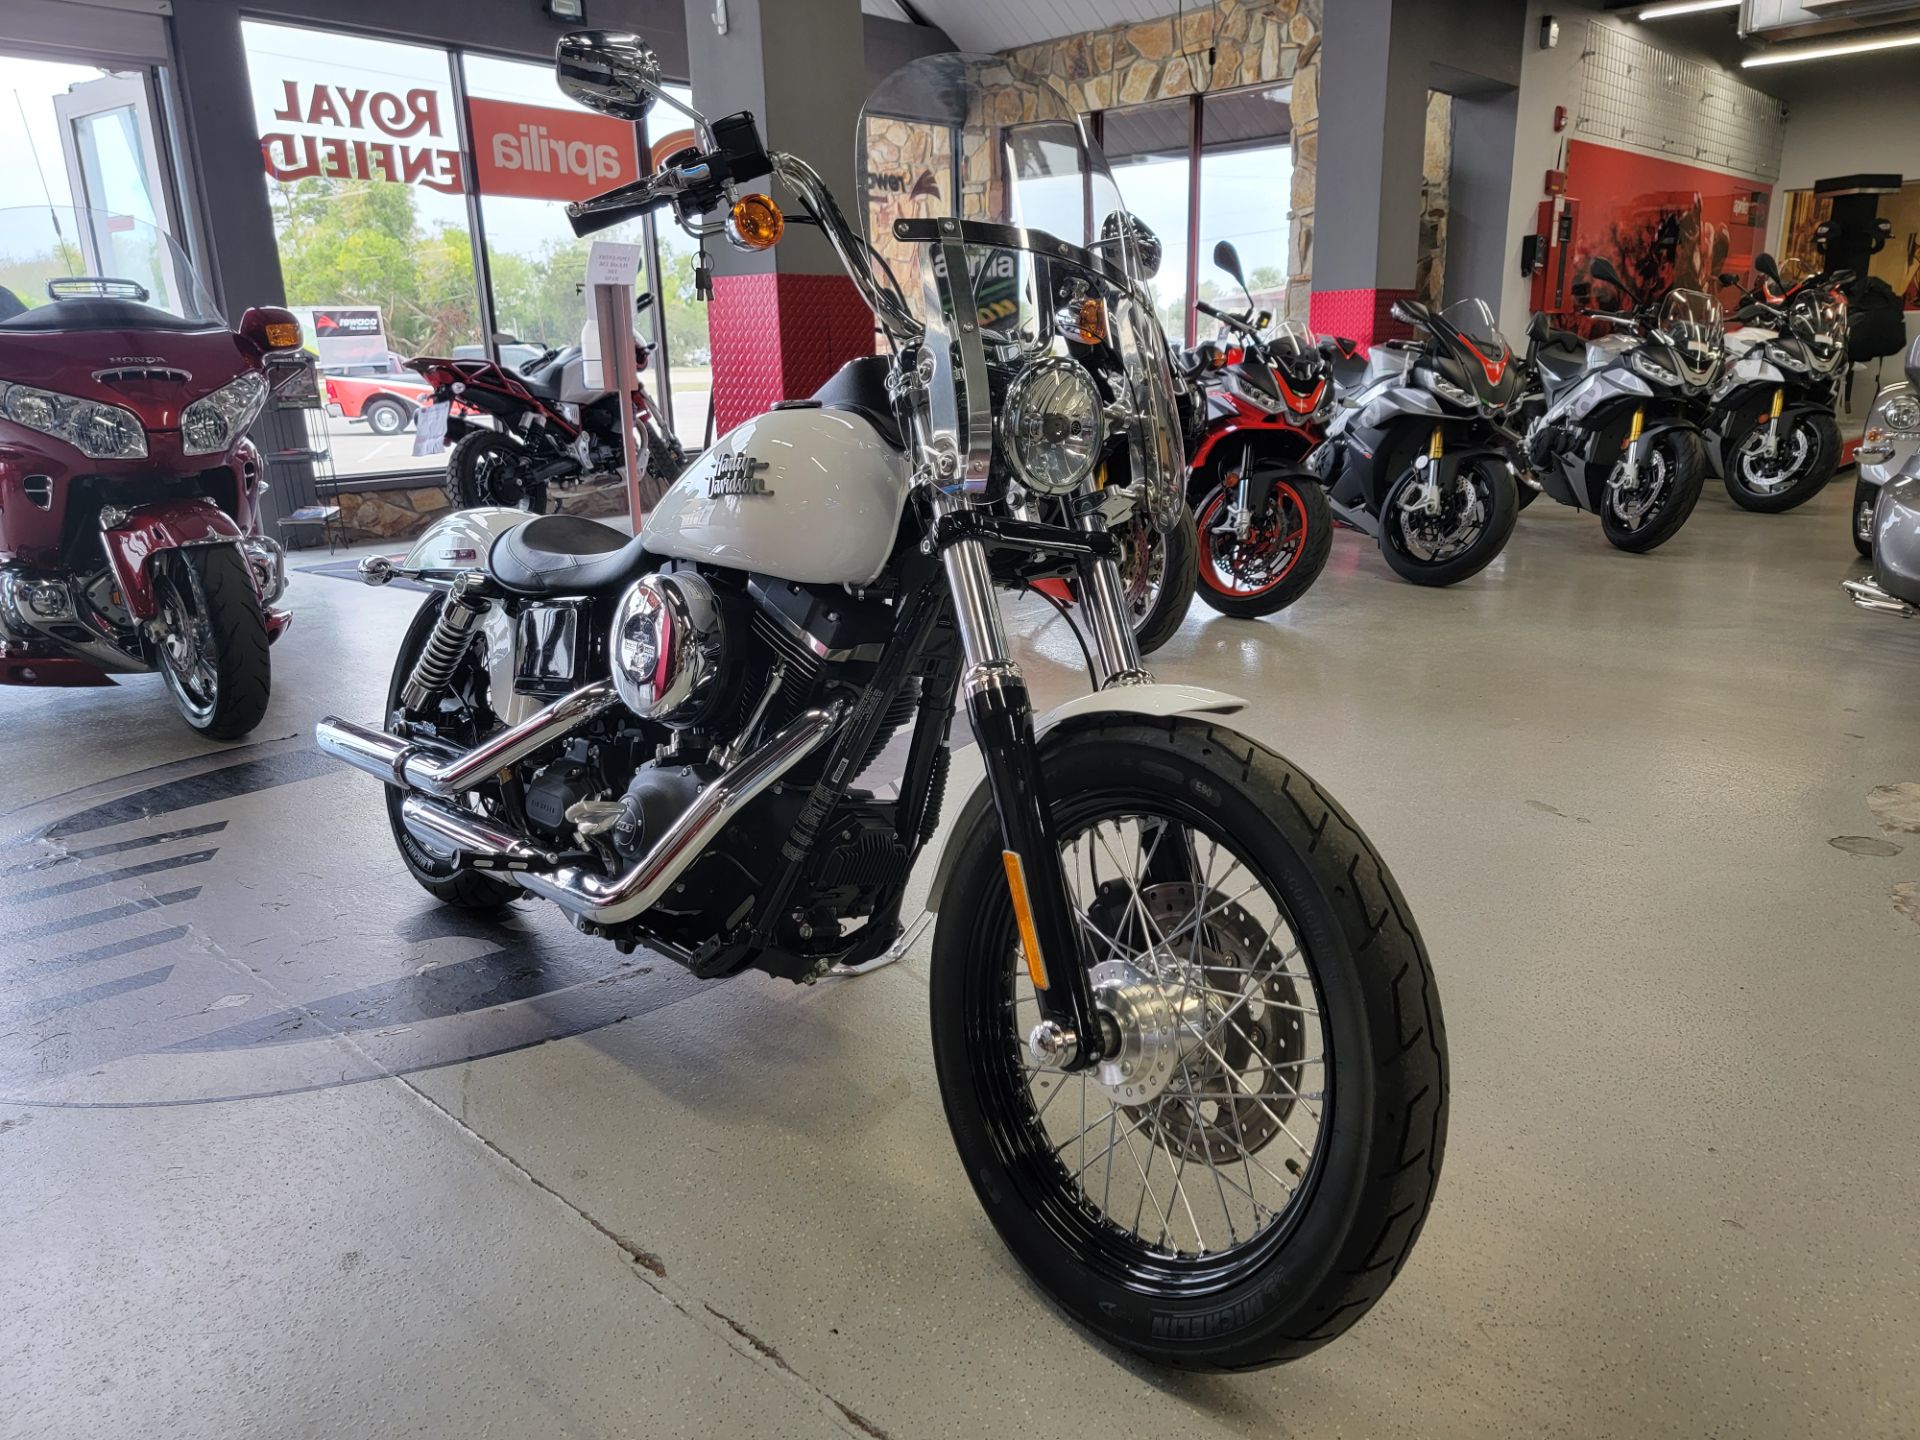 2016 Harley-Davidson Street Bob® in Fort Myers, Florida - Photo 2